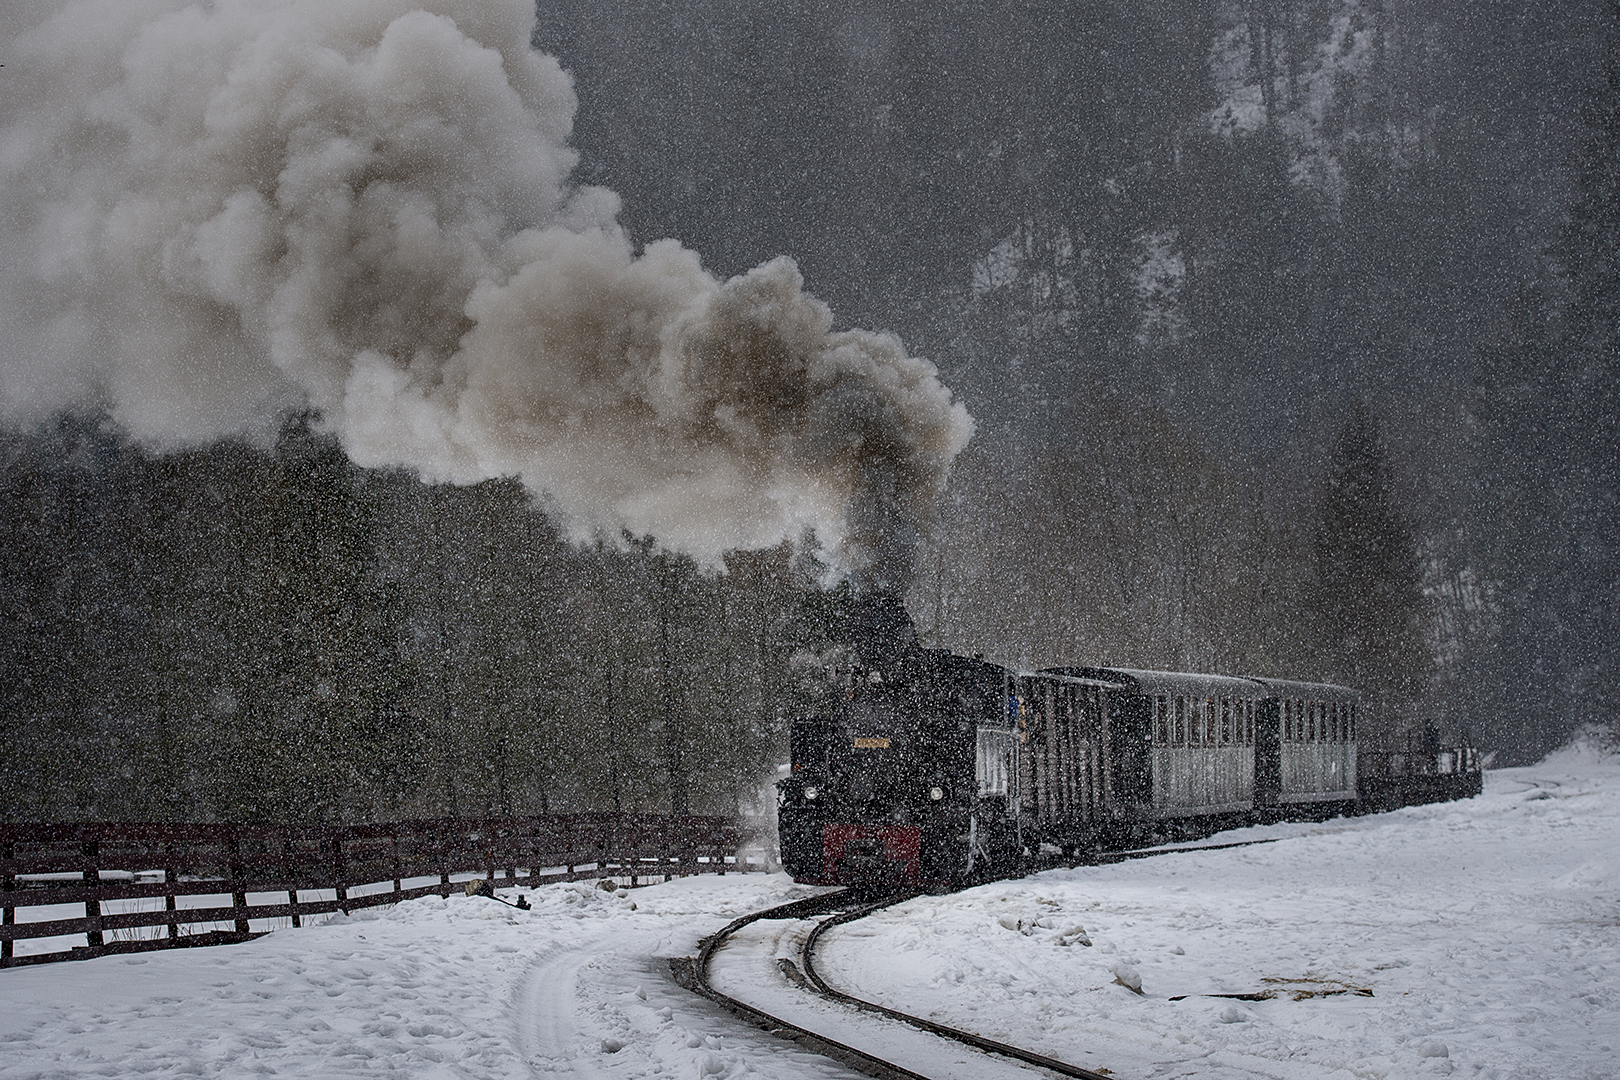 Scubli Mariana-Winter train